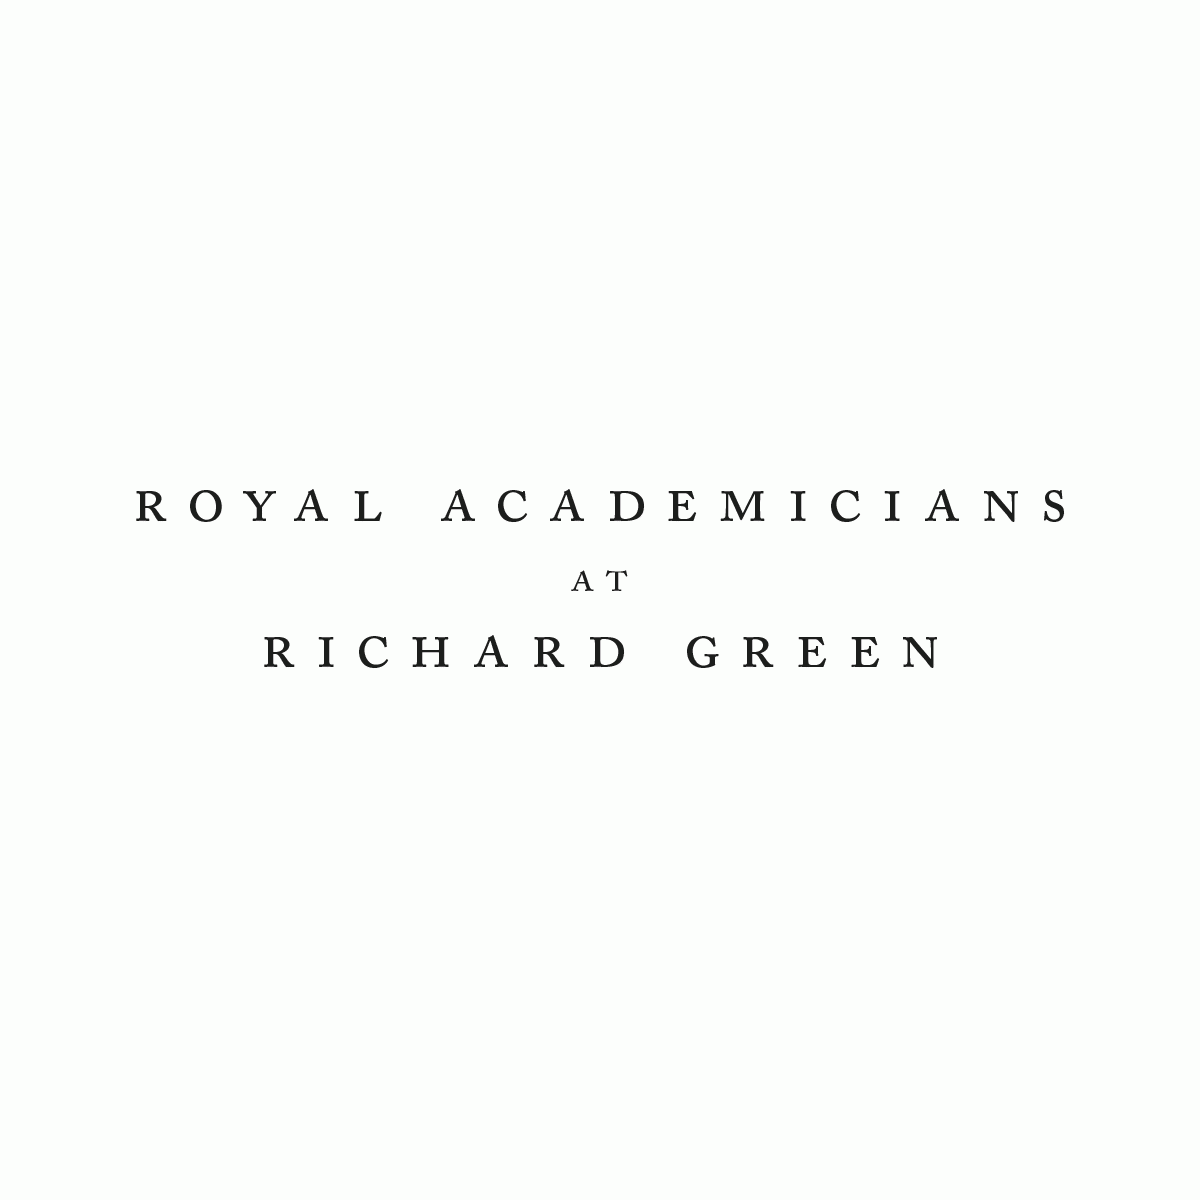 Royal Academicians